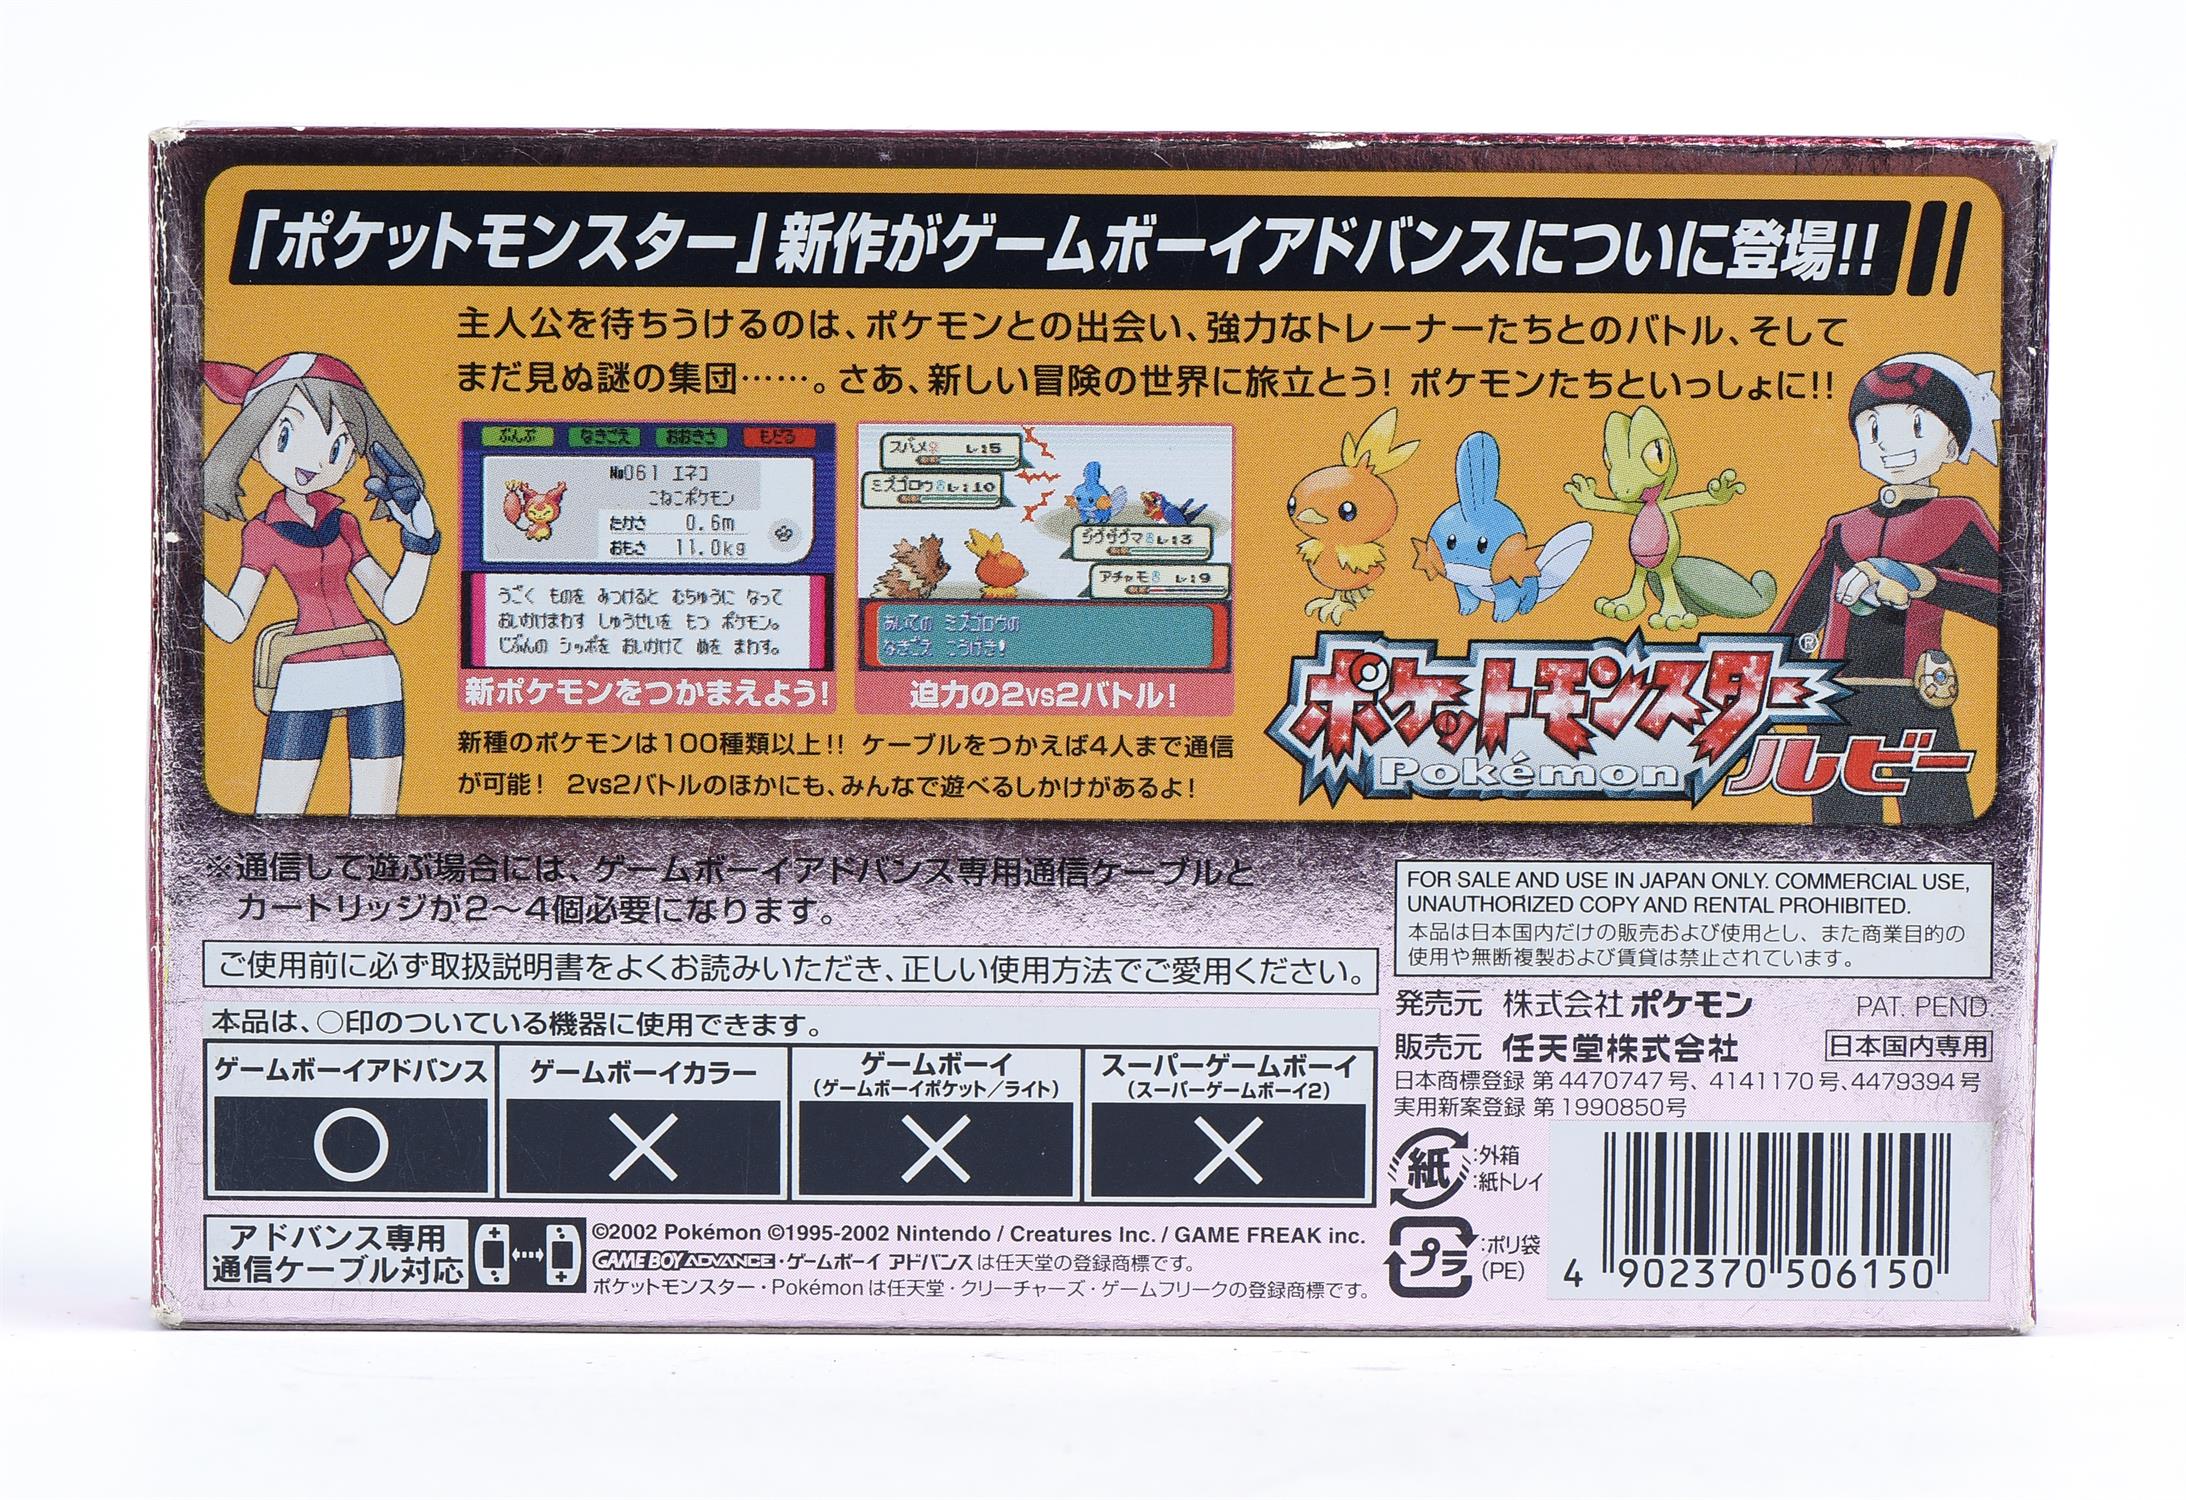 Pokémon Ruby Game Boy Advance (GBA) game [Box Only] - Image 4 of 5